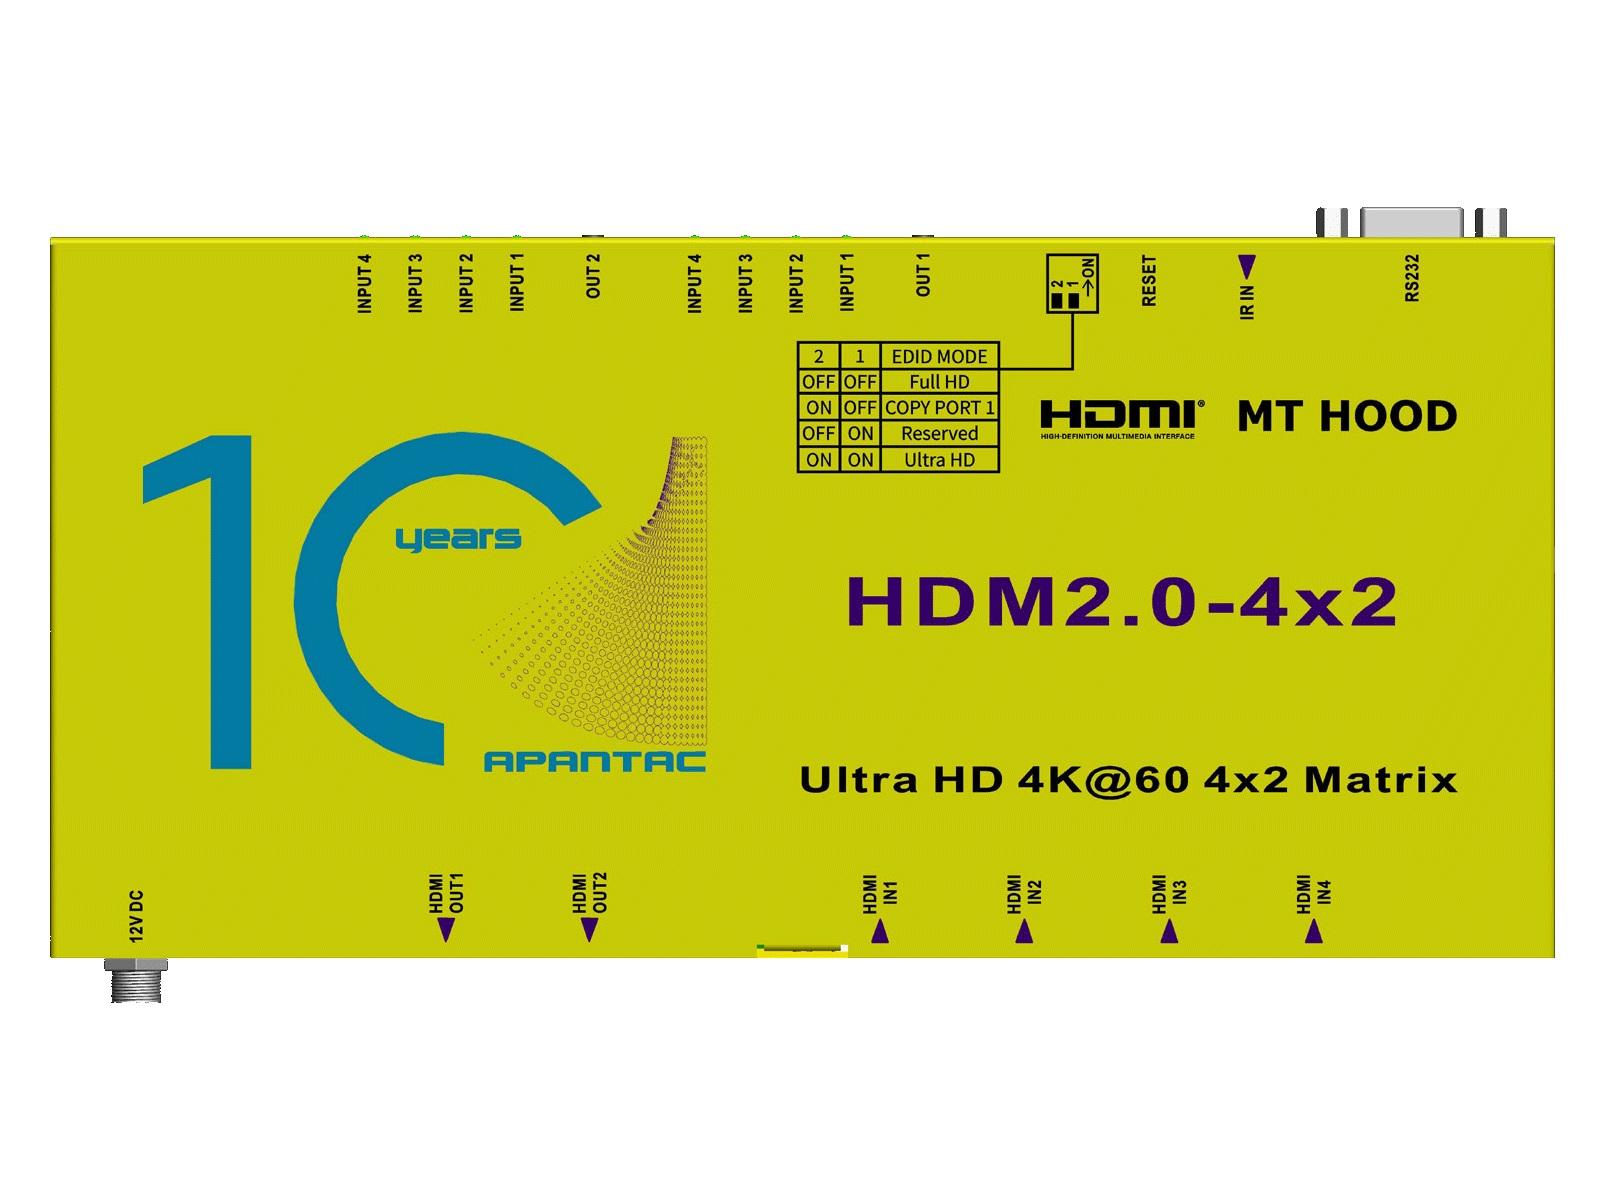 HDM2.0-4x2-UHD 4x2 1 RU HDMI 2.0 Matrix Switch with IR and RS232 control by Apantac